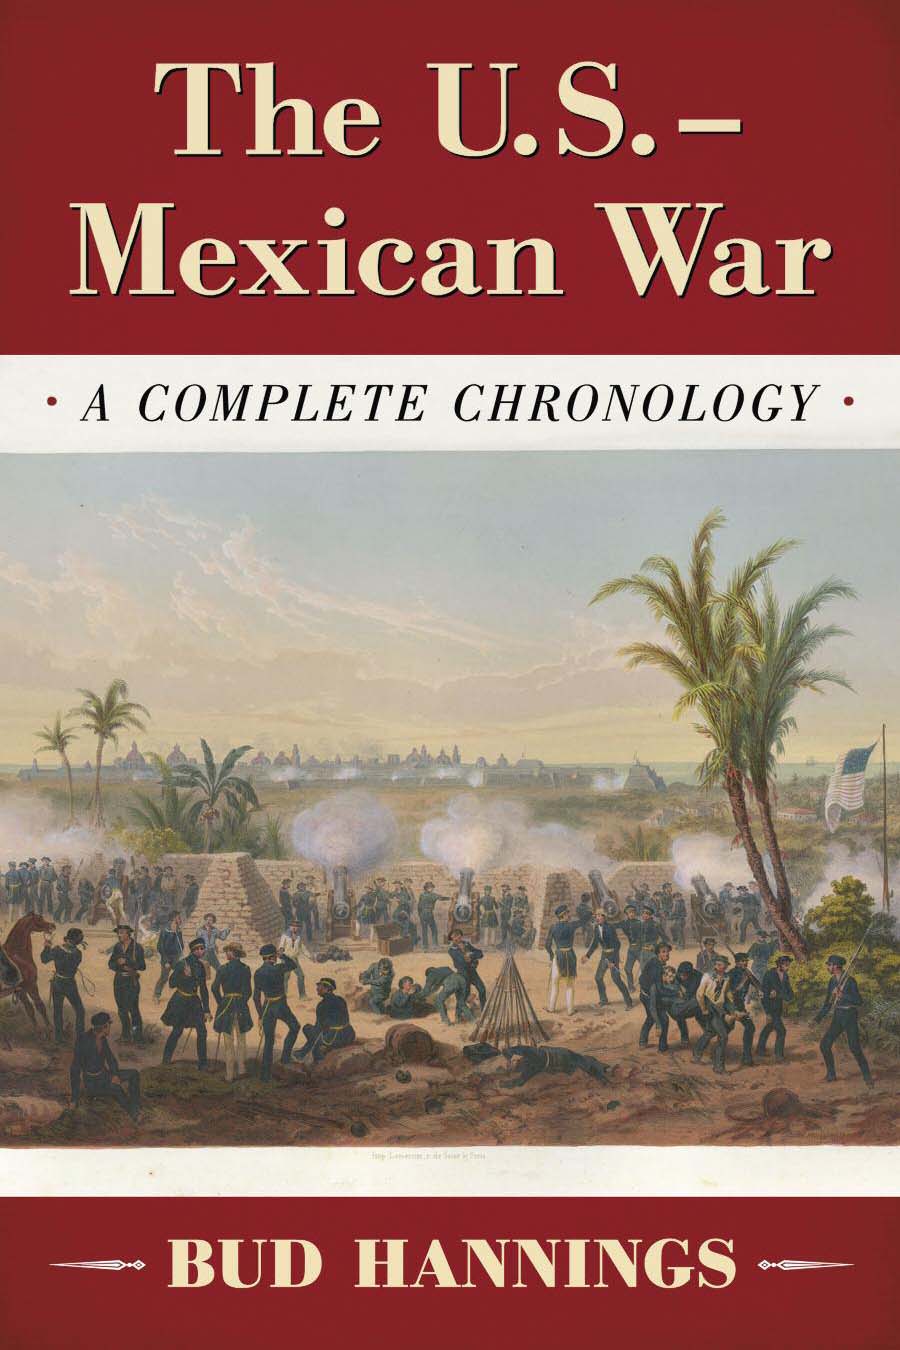 Mexican war cover.jpg